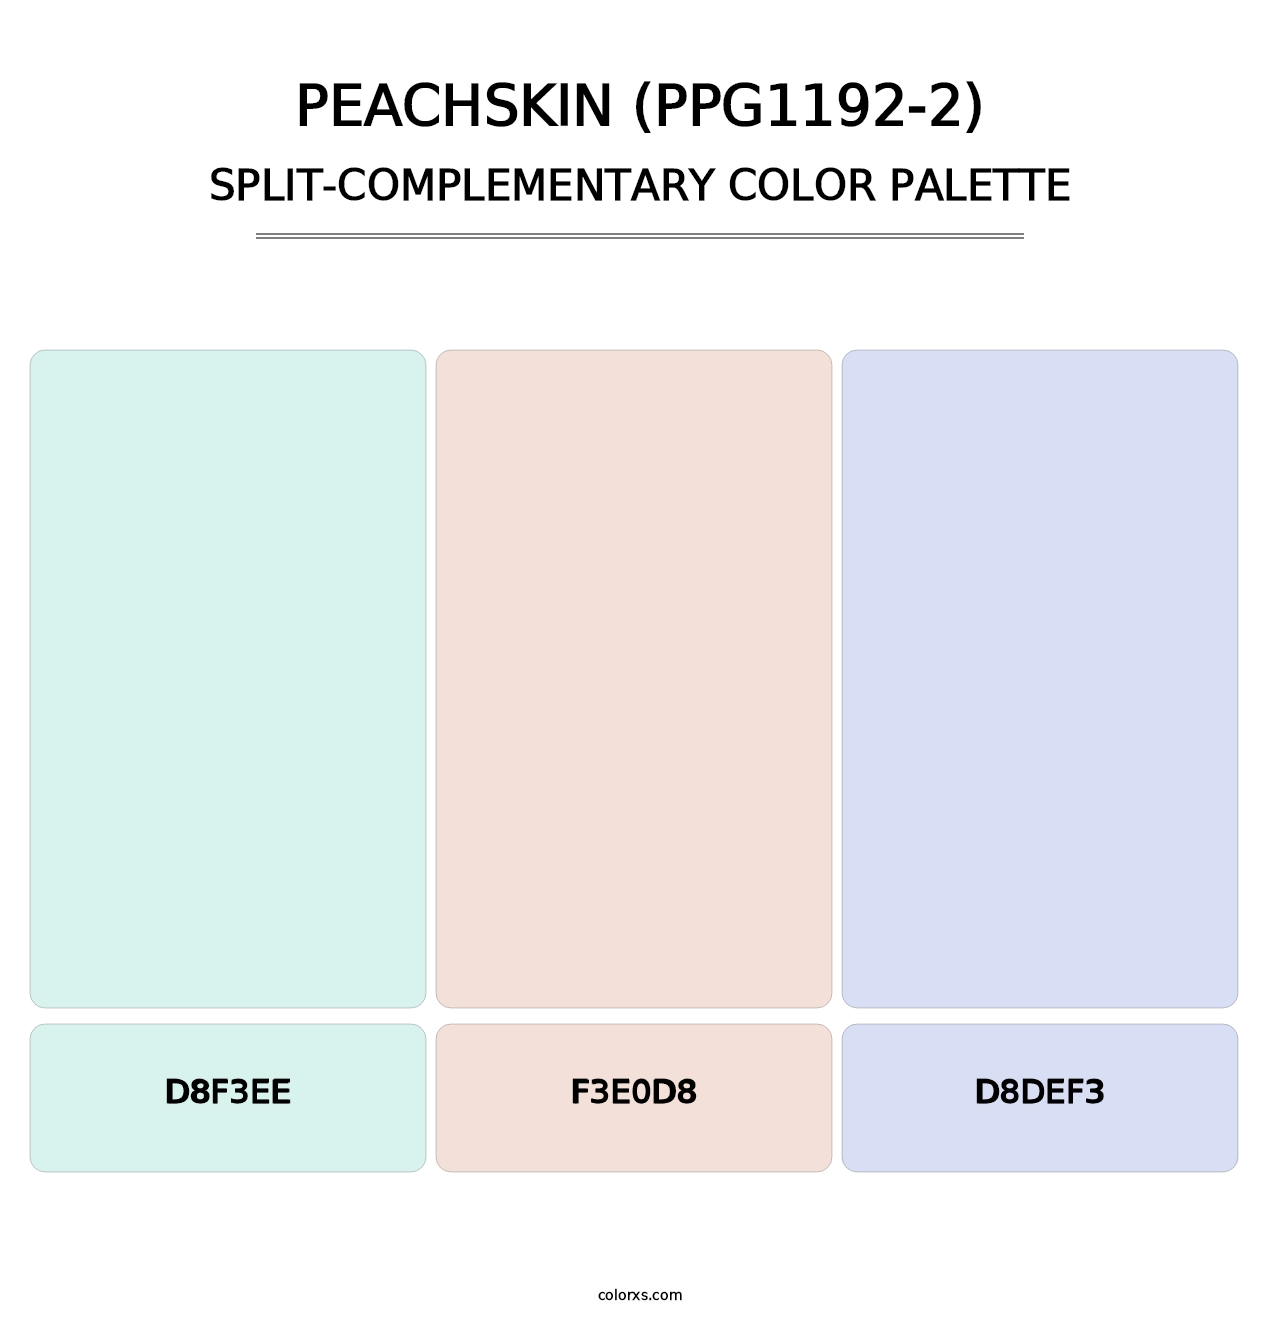 Peachskin (PPG1192-2) - Split-Complementary Color Palette